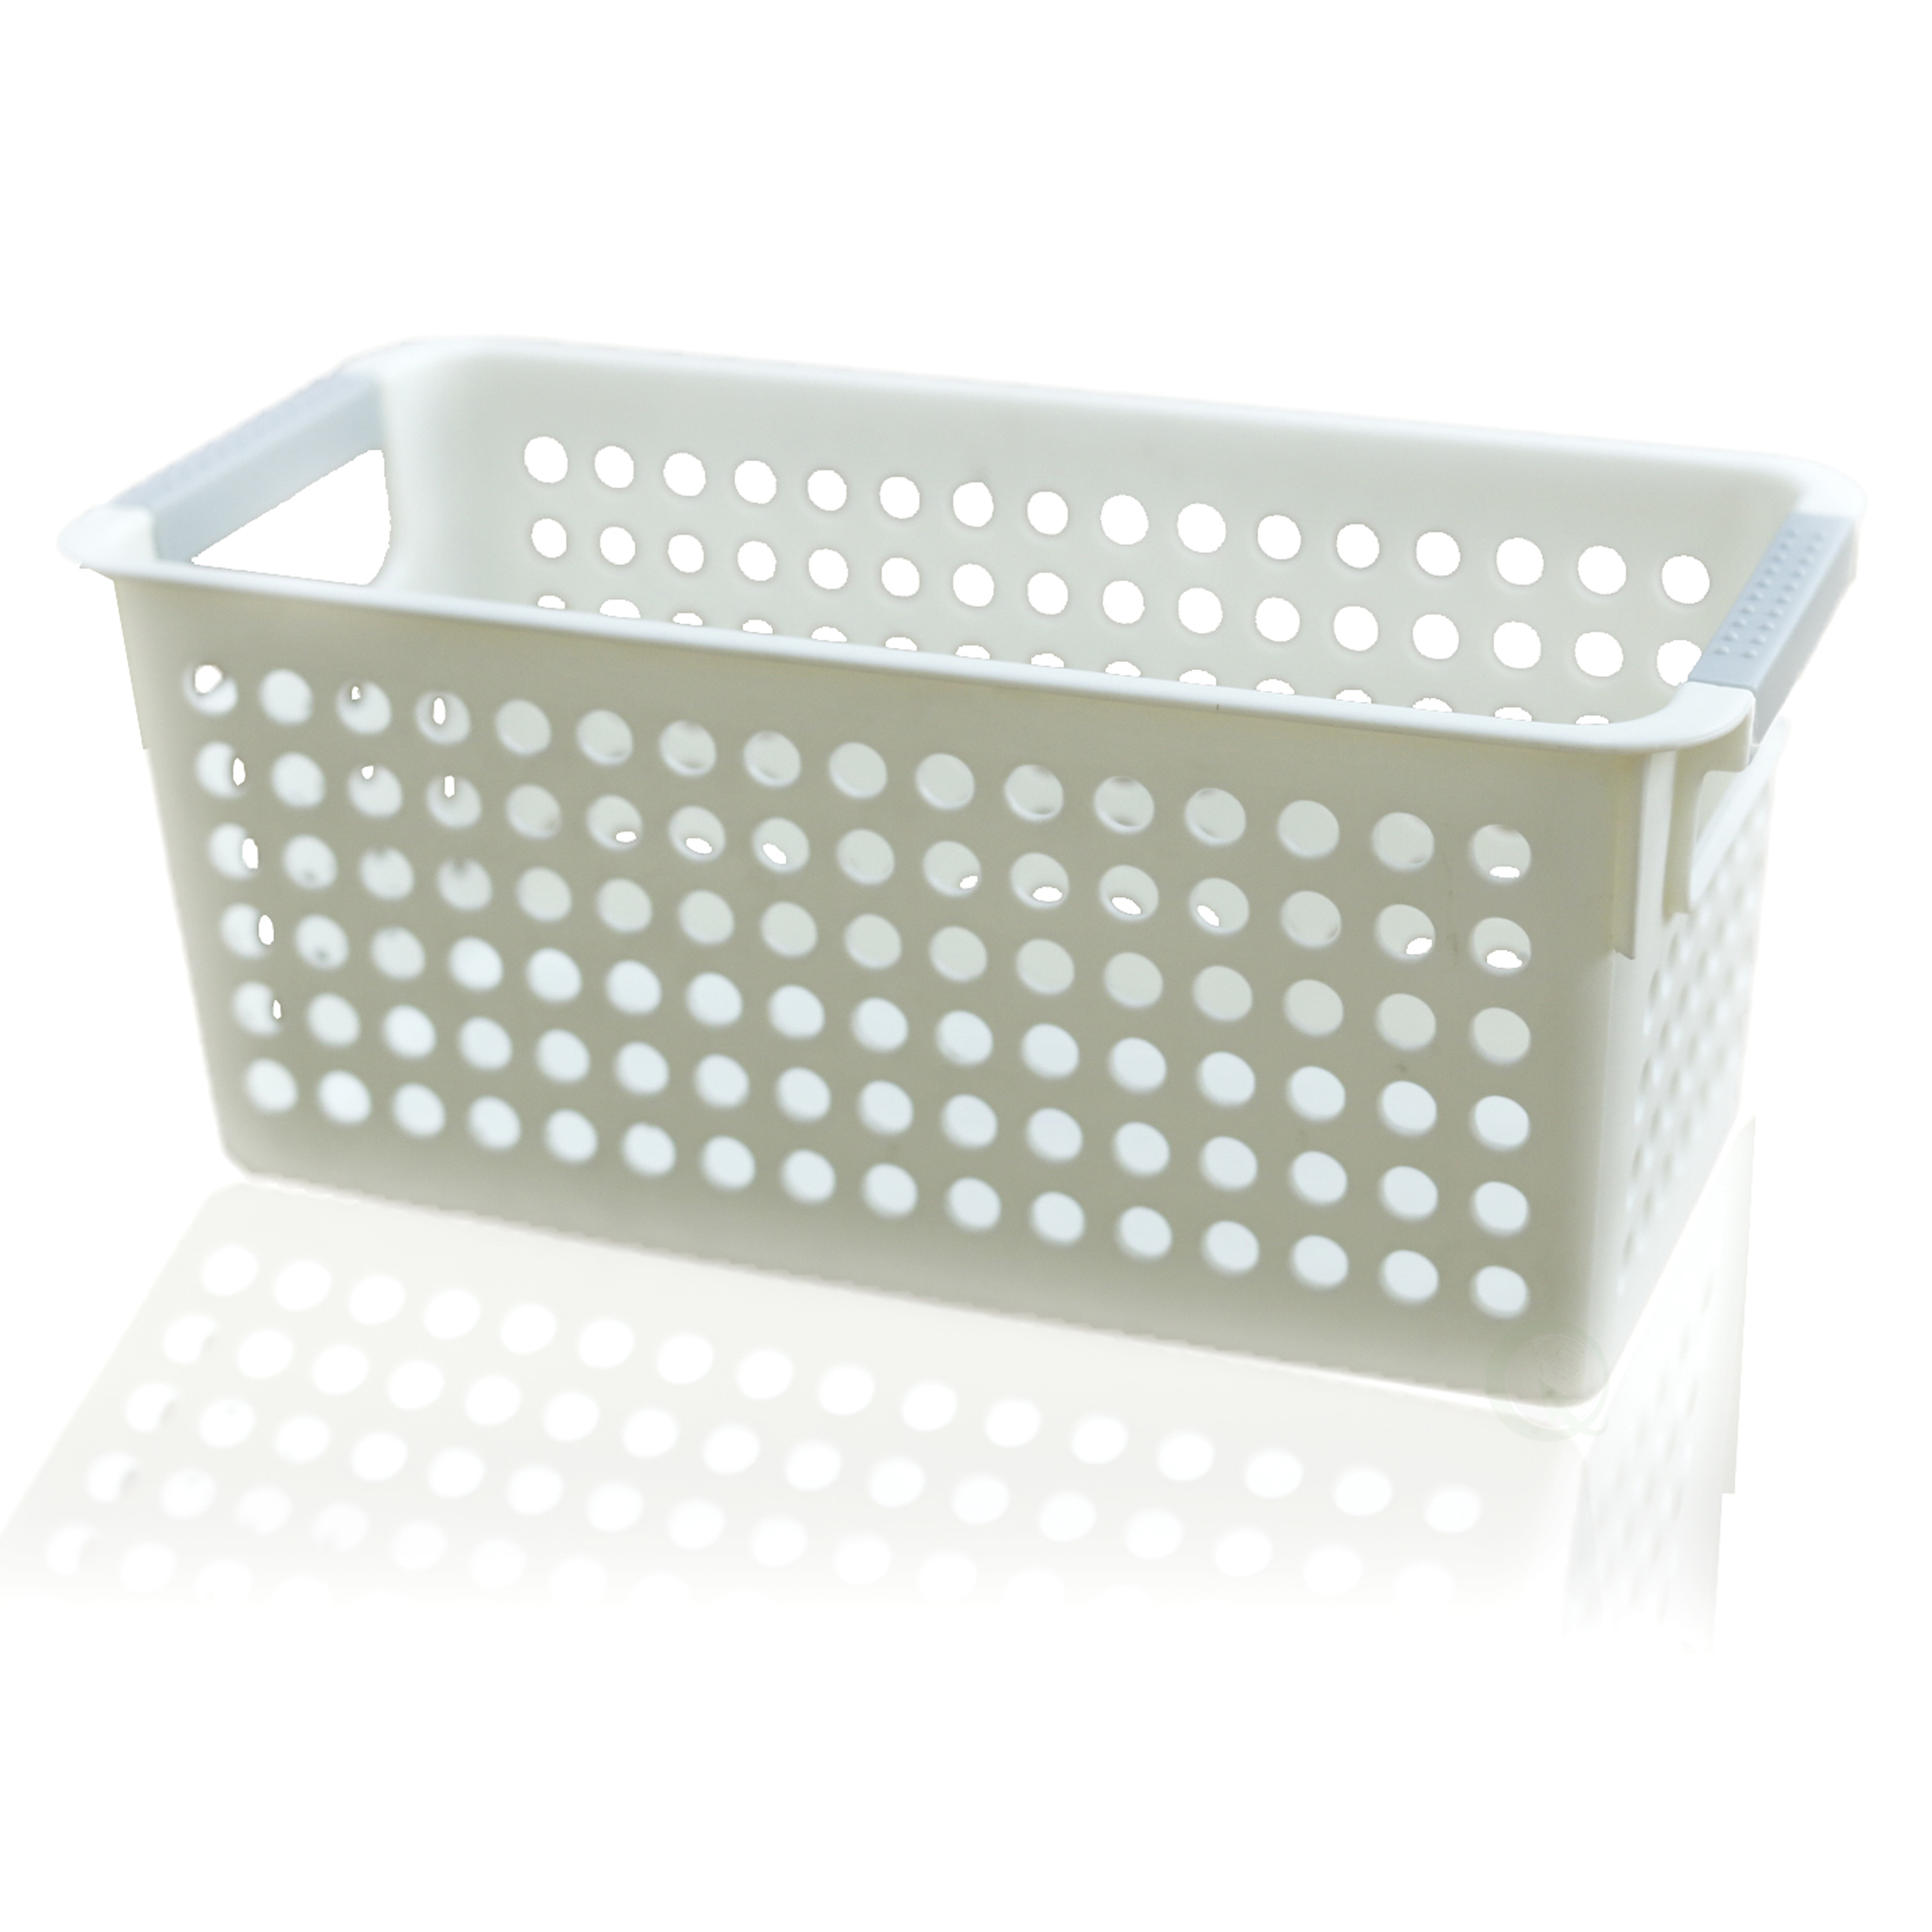 White Rectangular Plastic Shelf Organizer Basket With Handles - Single Large